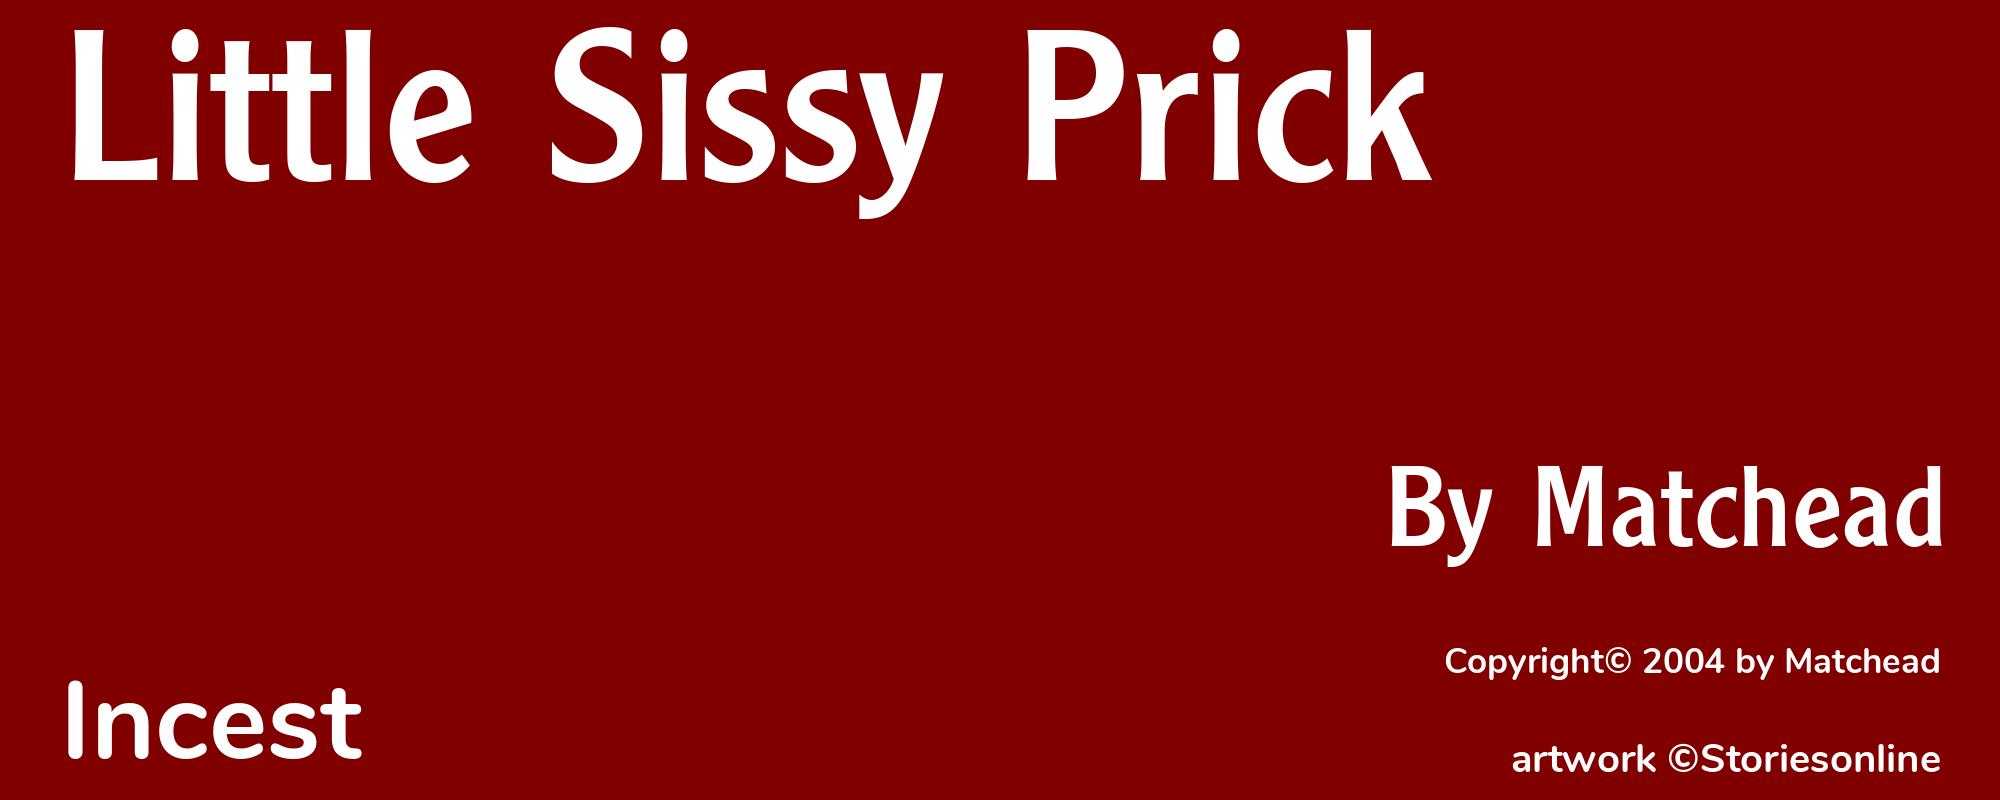 Little Sissy Prick - Cover